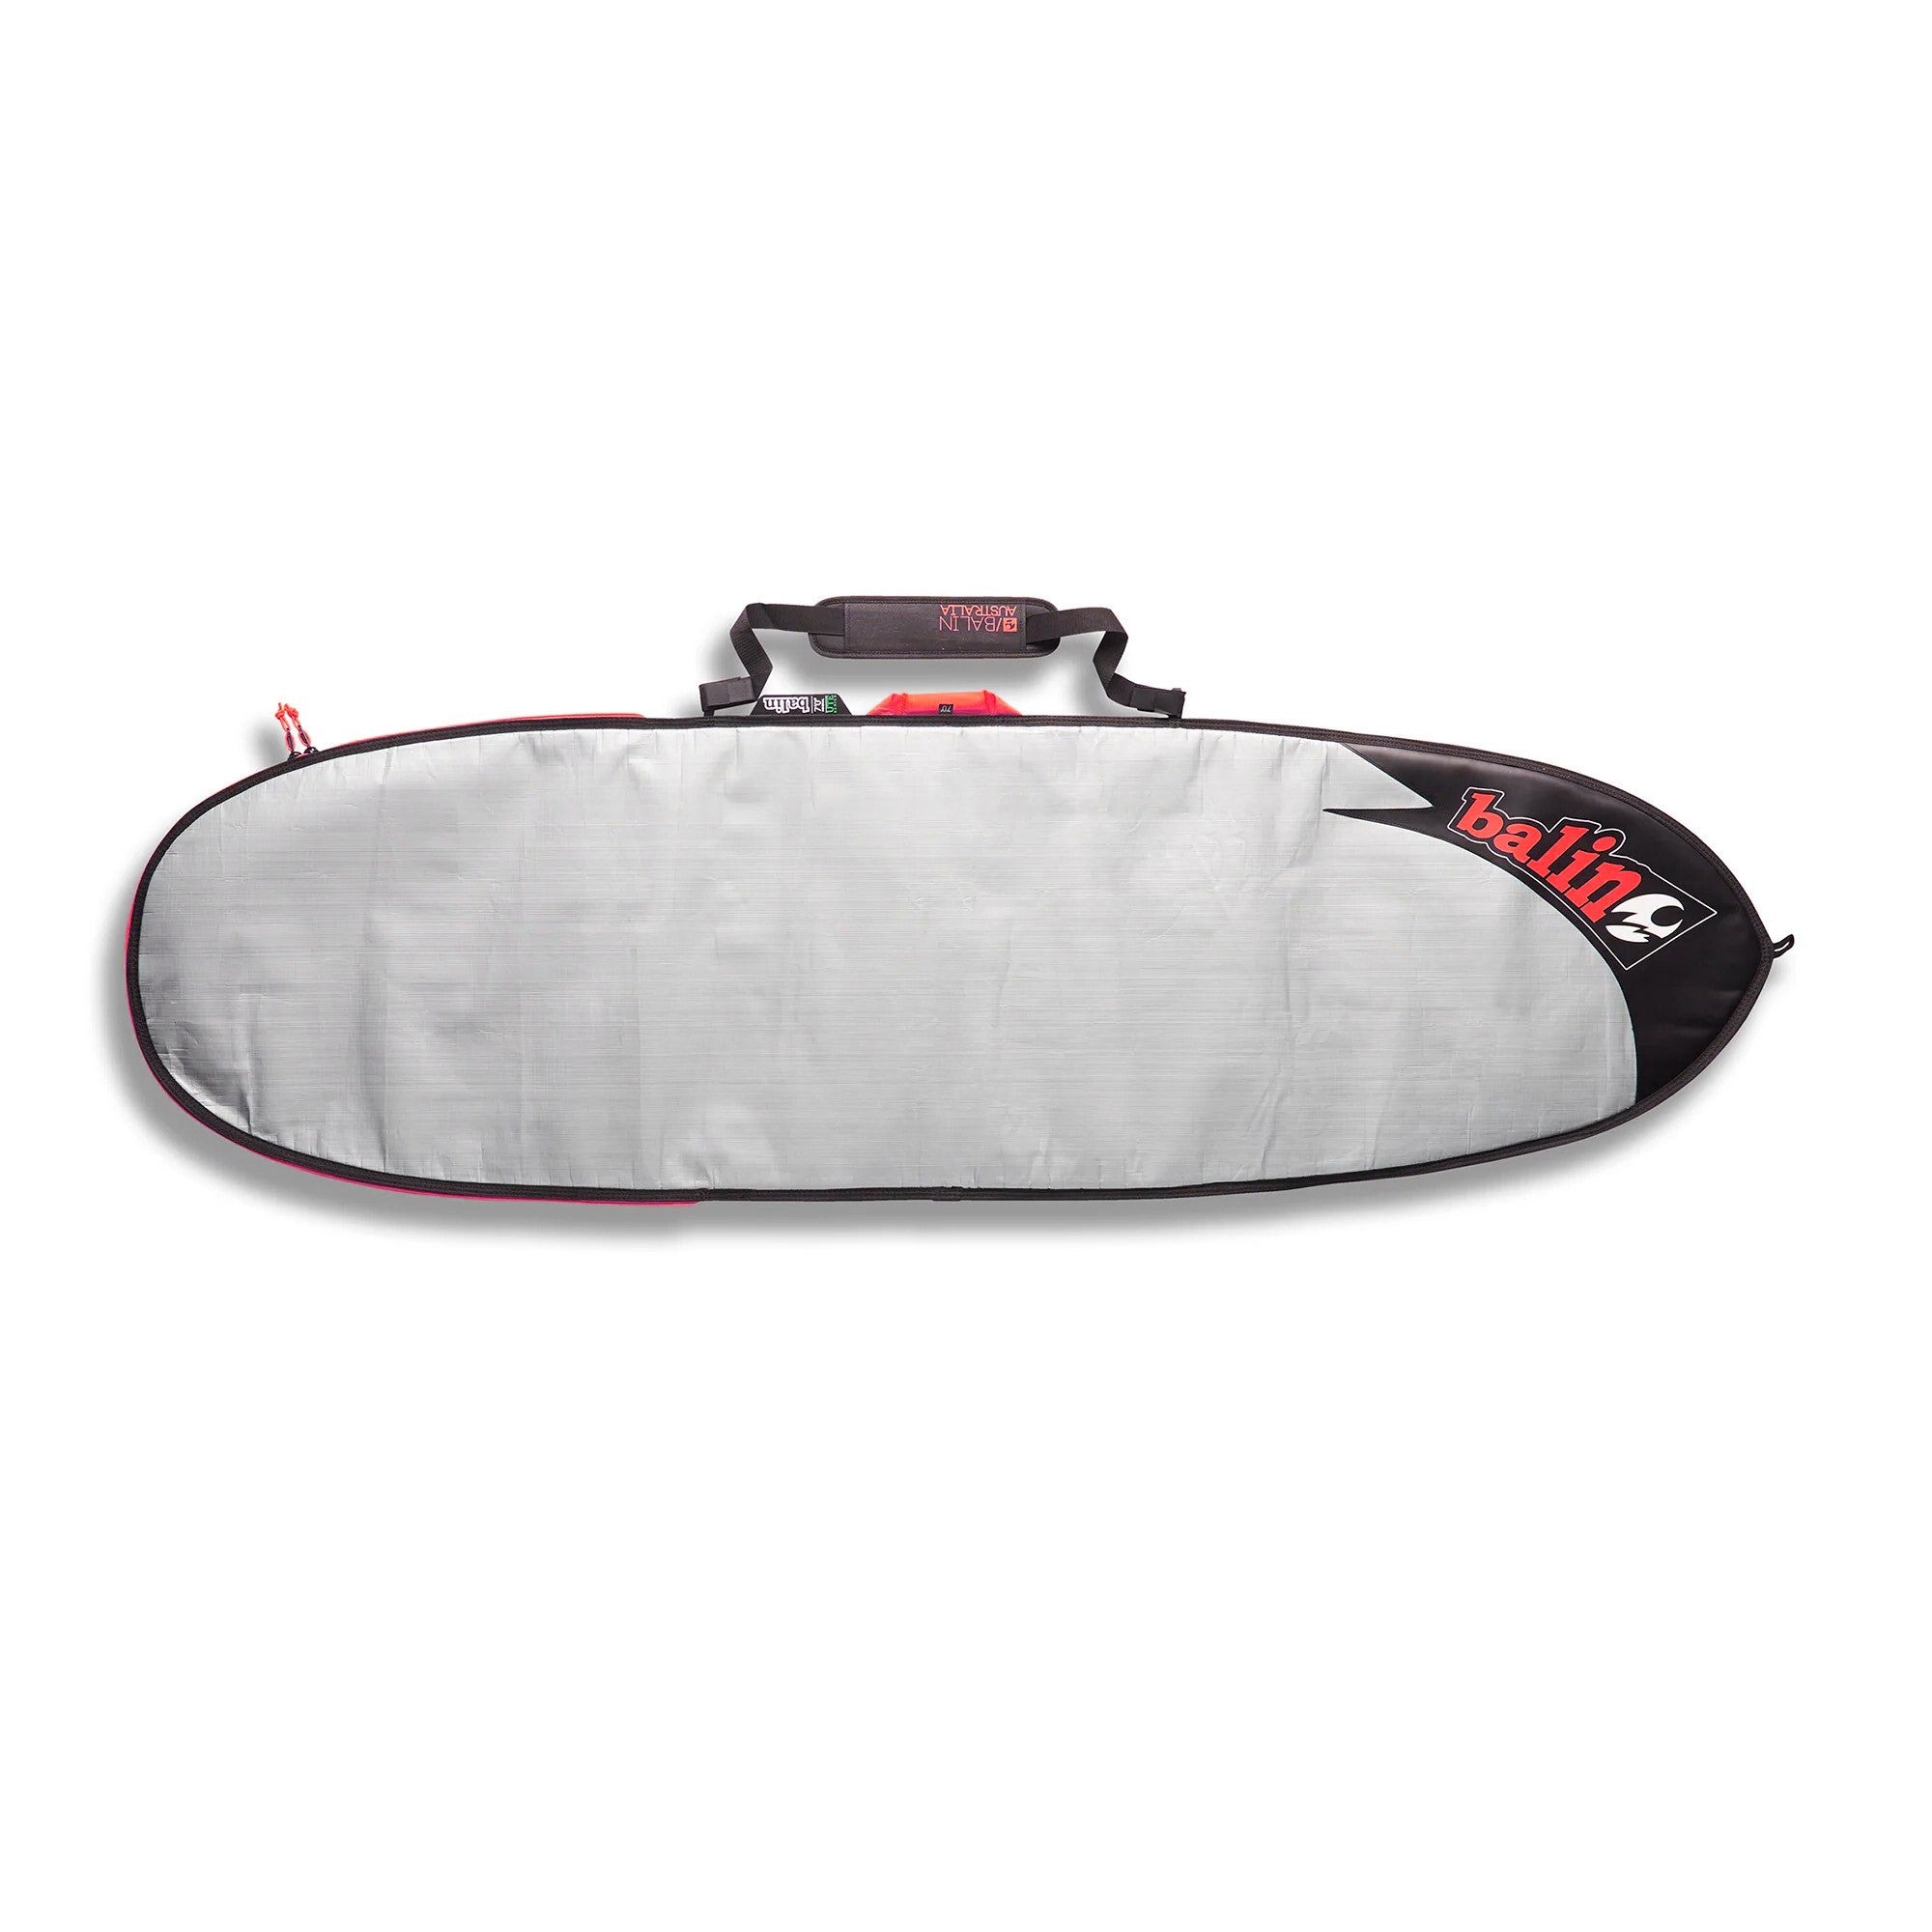 BALIN - Surfboard cover 1 board - UTE - Mini Malibu 5mm - Red